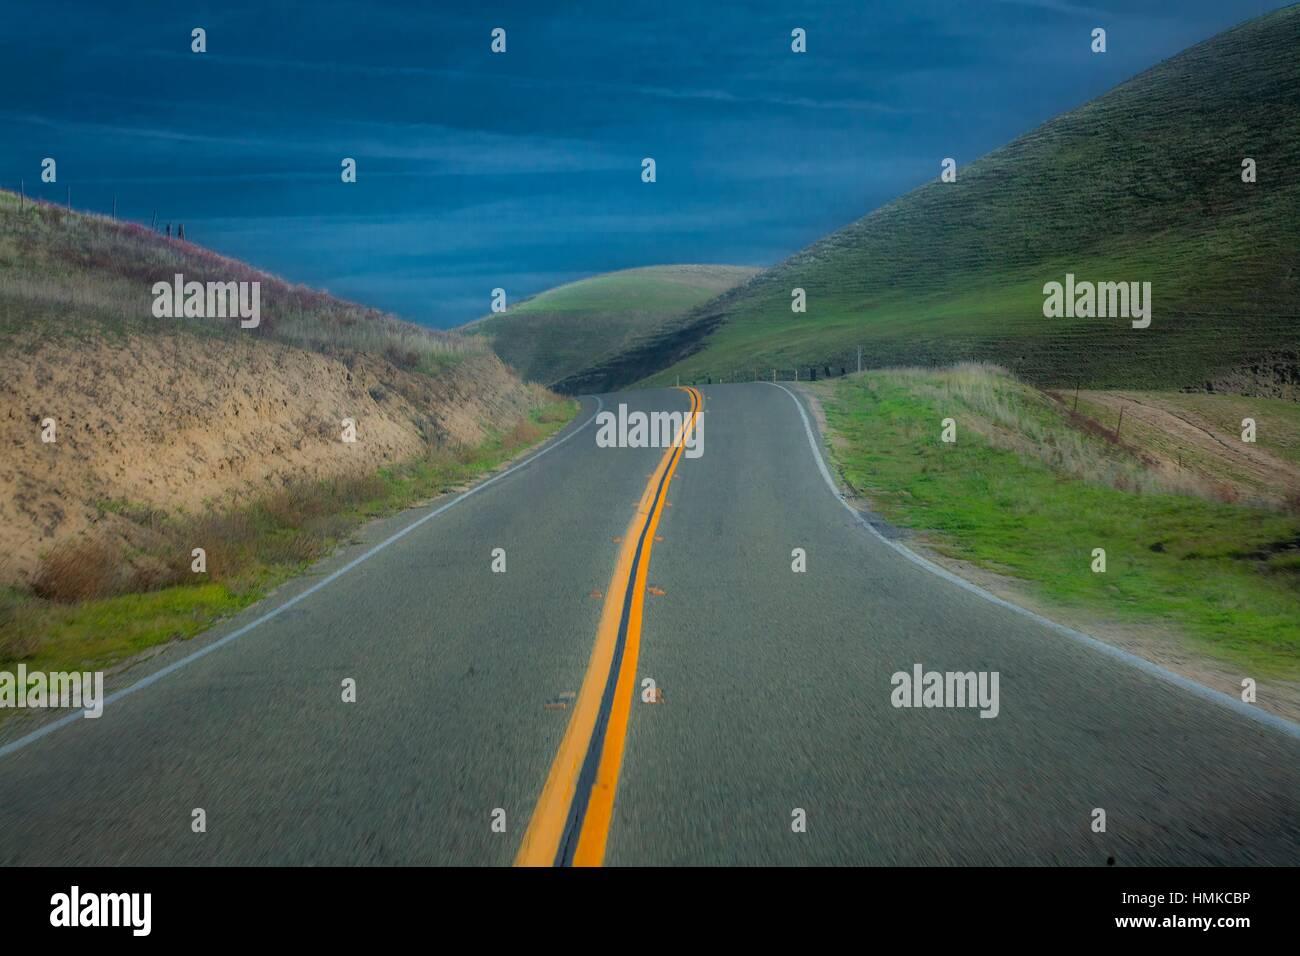 A two lane road passes through pastureland in rural California. Stock Photo